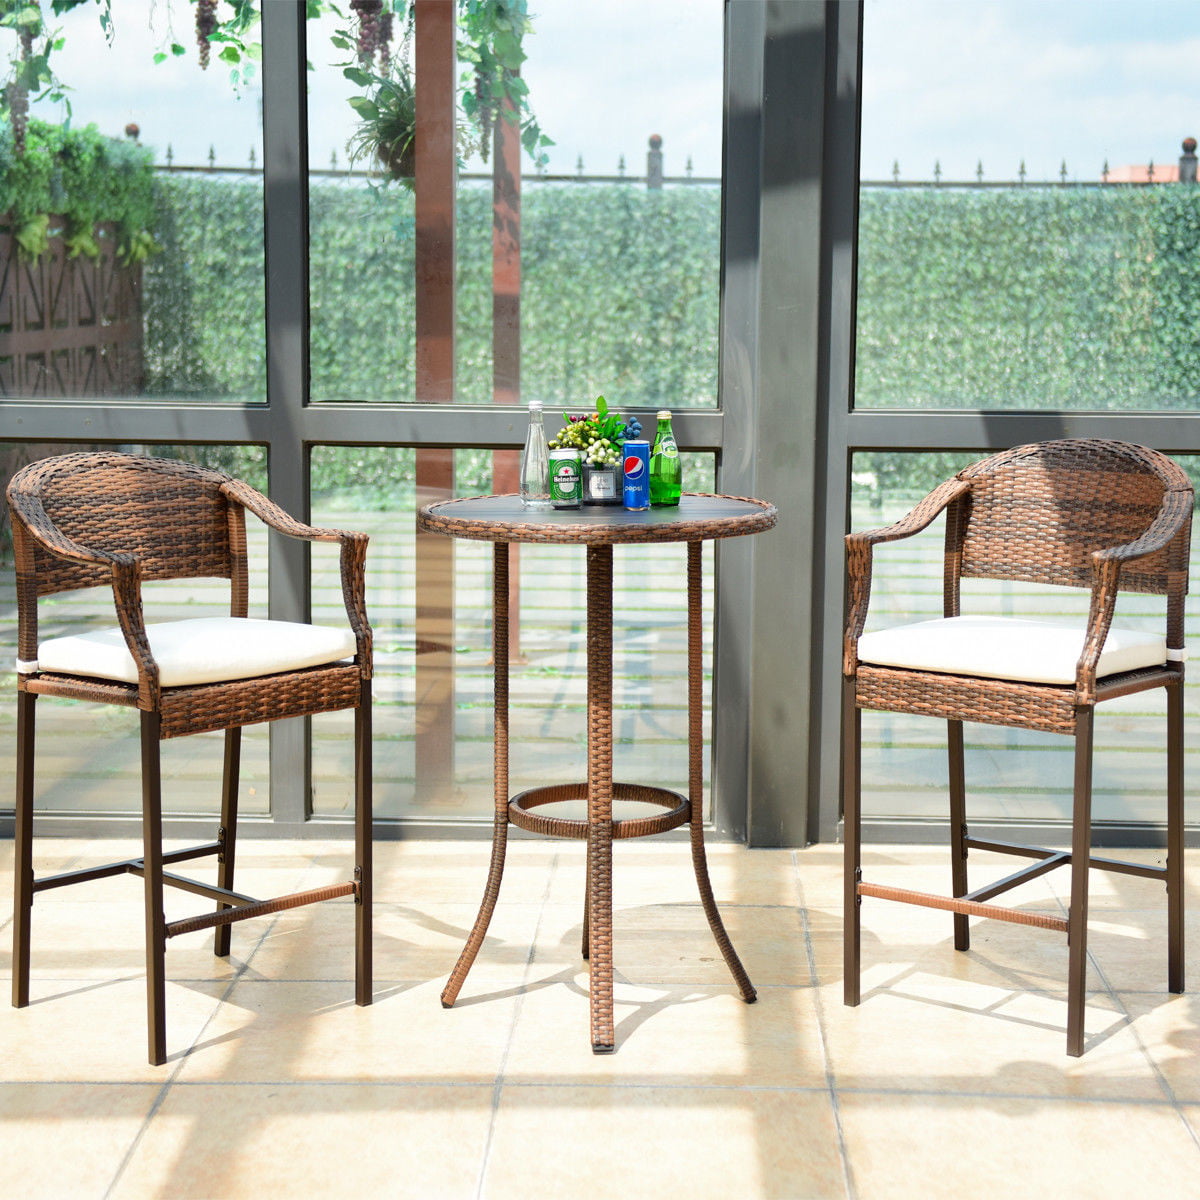 costway 3pc outdoor rattan bar stool table rattan patio furniture set